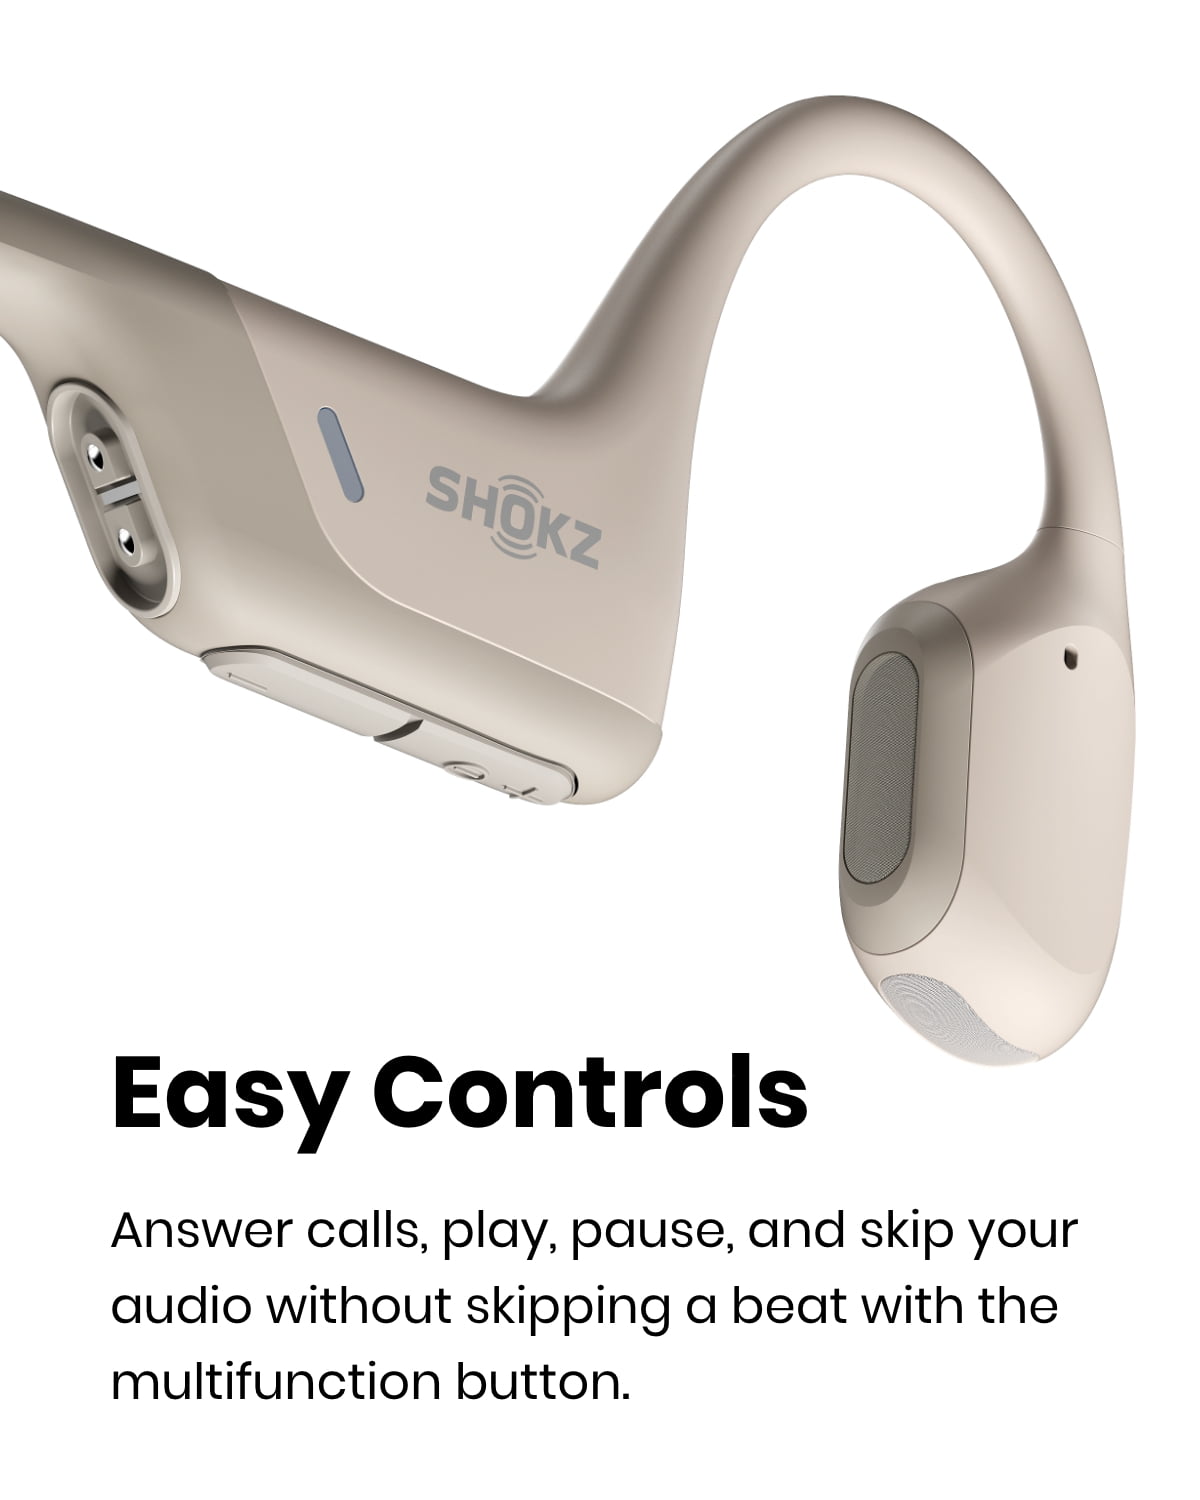 Shokz OpenRun Pro Bone Conduction Open-Ear Endurance Headphones